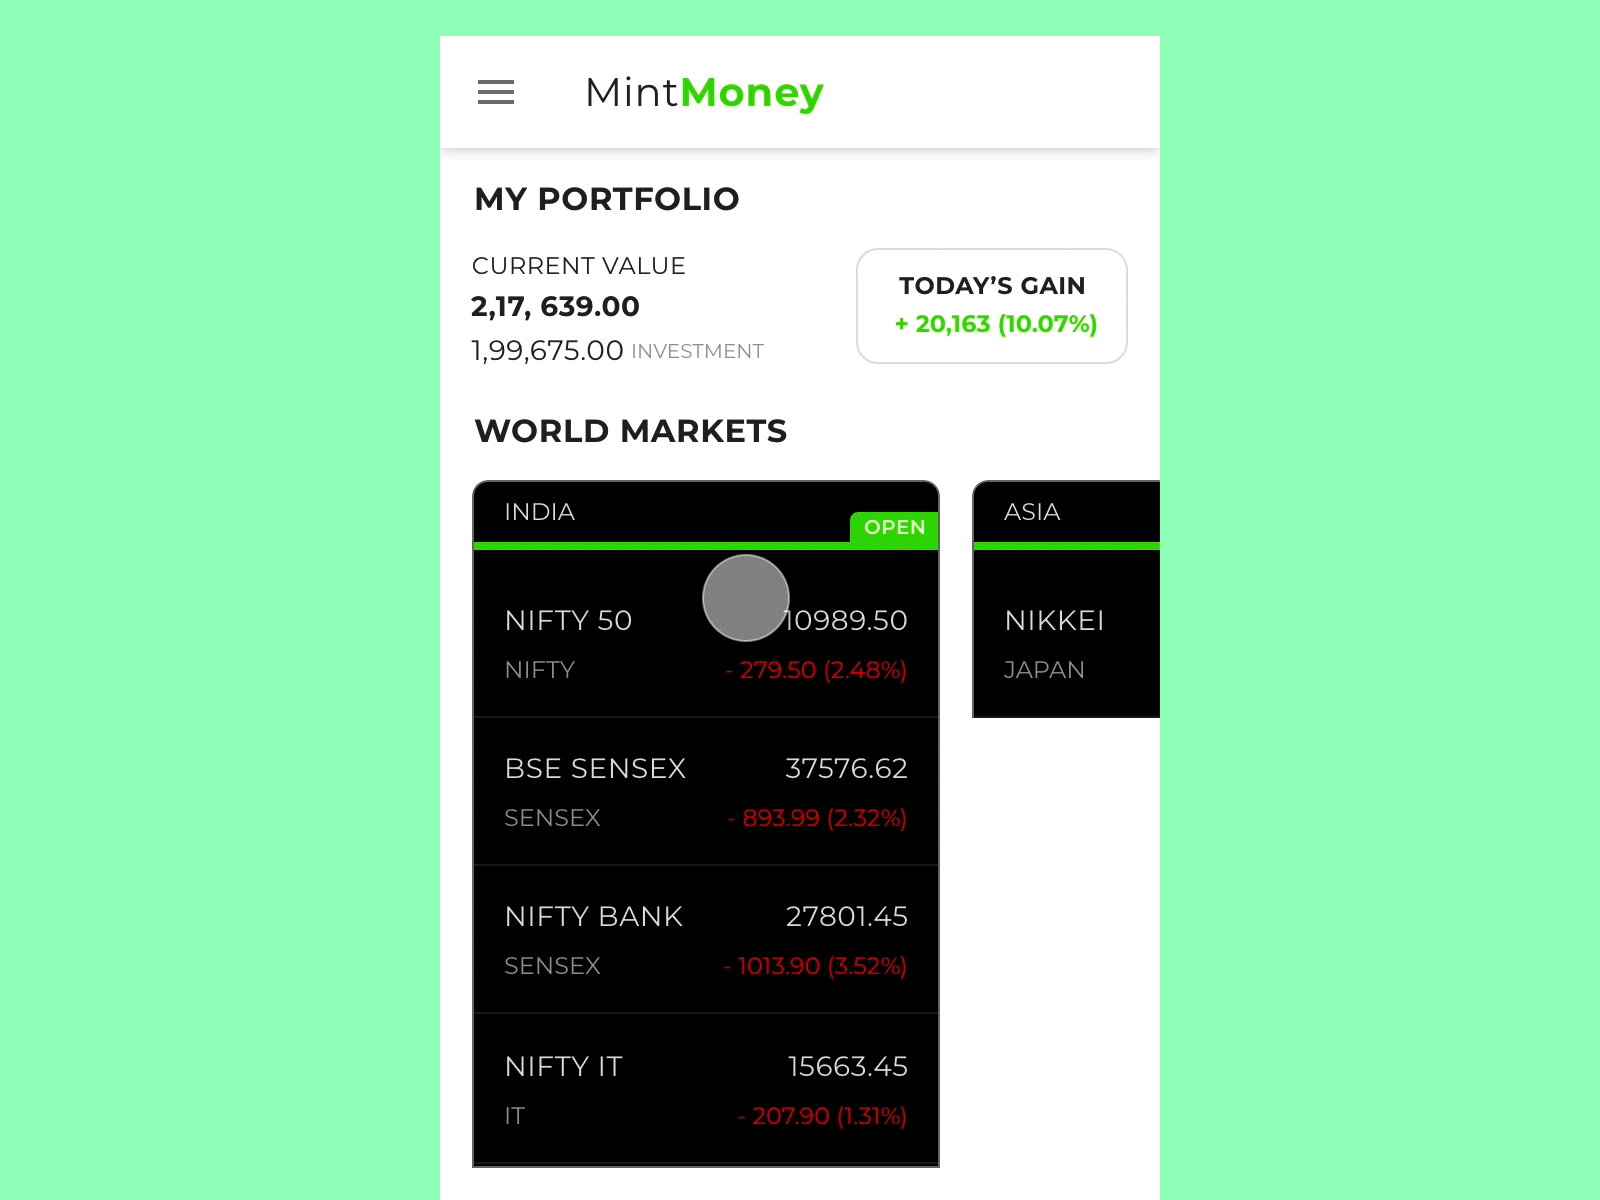 MintMoney App: Micro-Interaction for World Markets